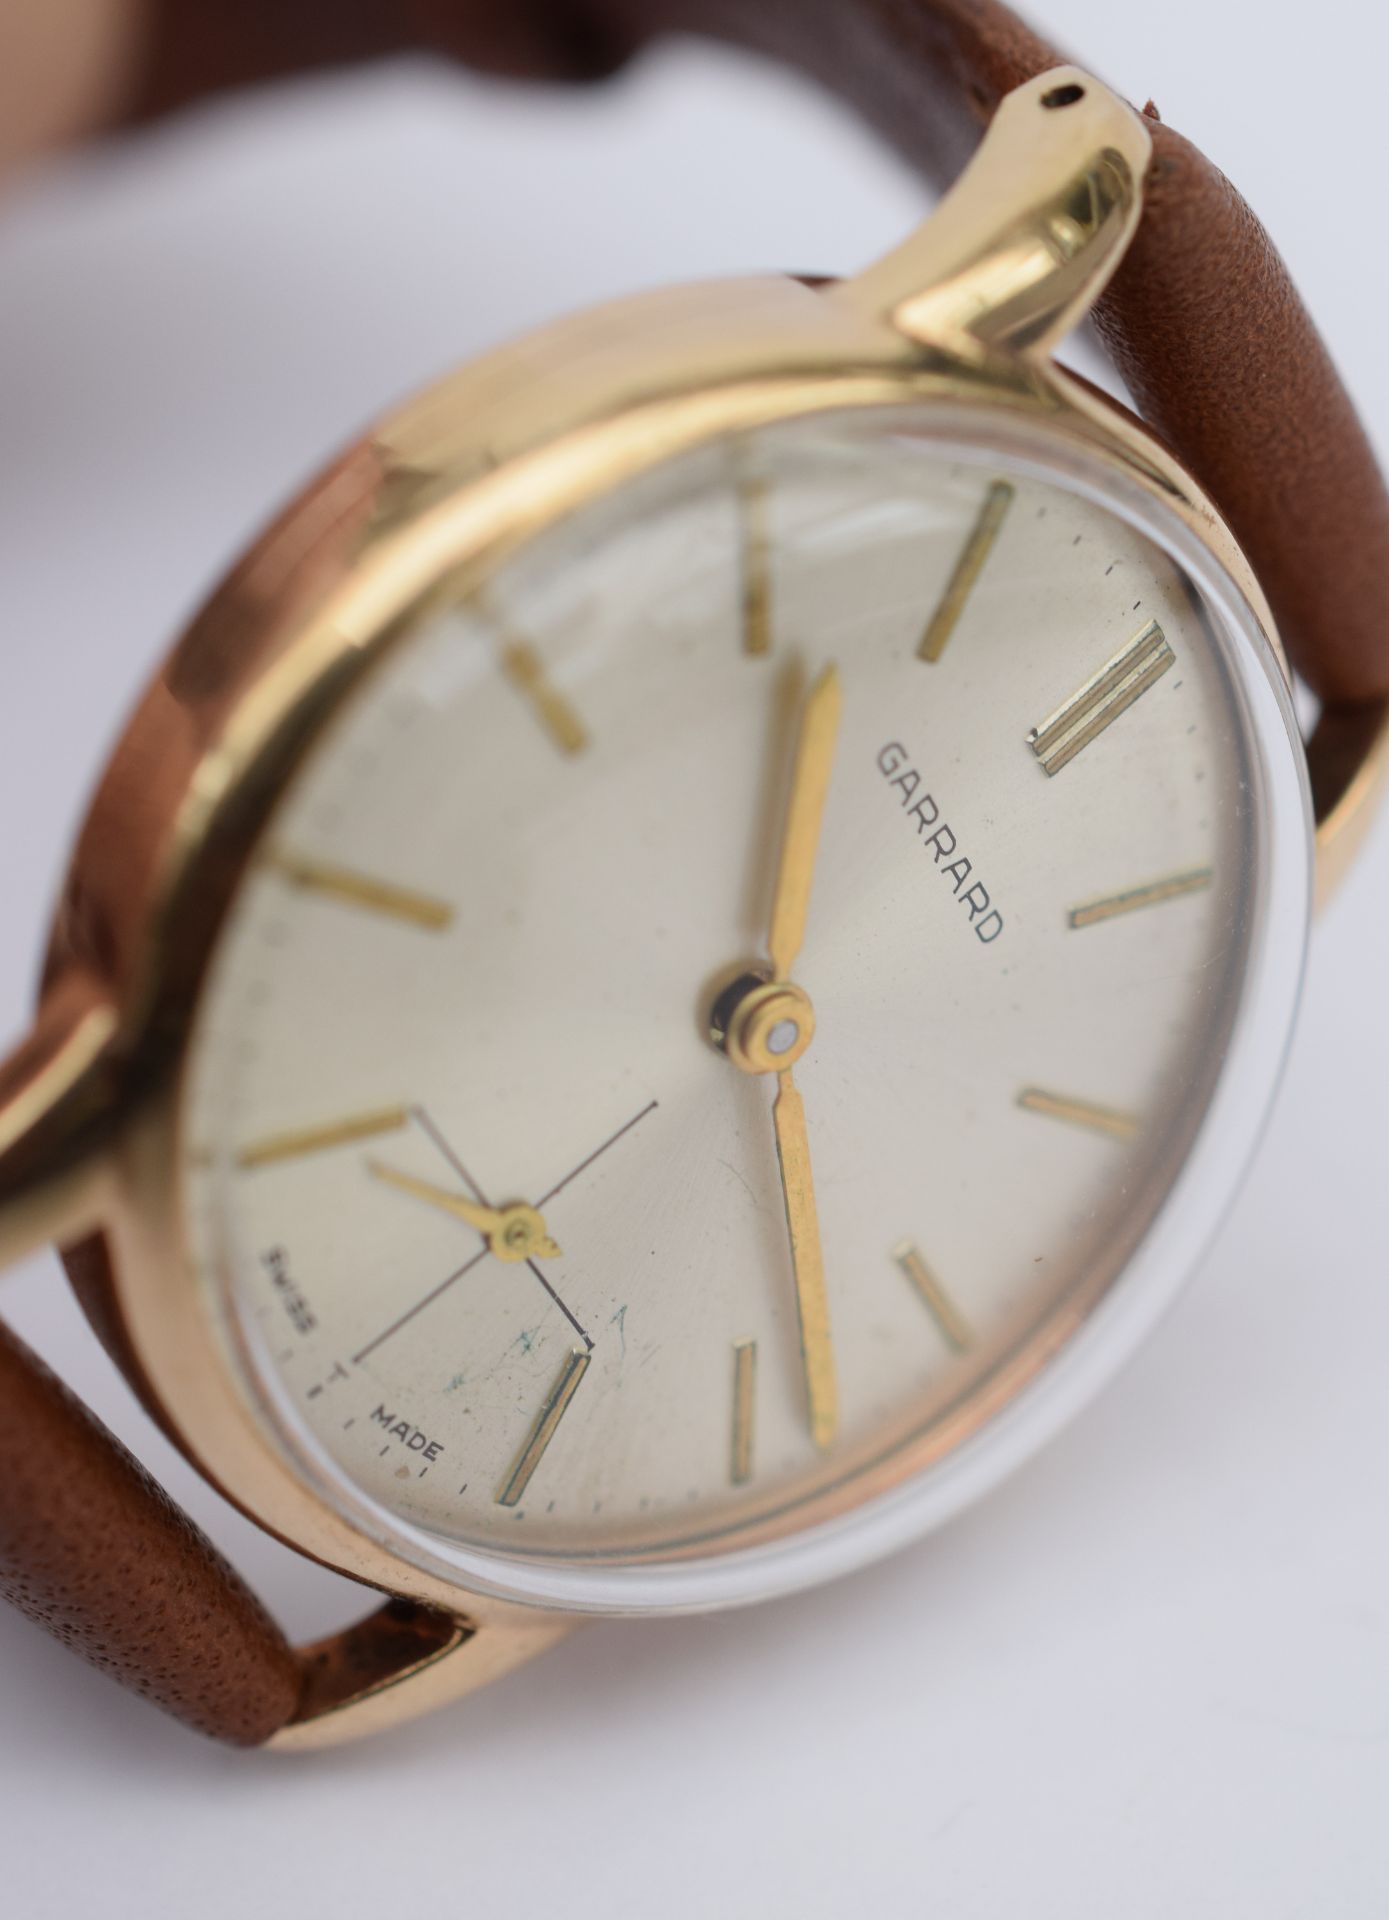 9ct Gold Garrard Gentleman's Manual Wind Wristwatch - Image 9 of 9